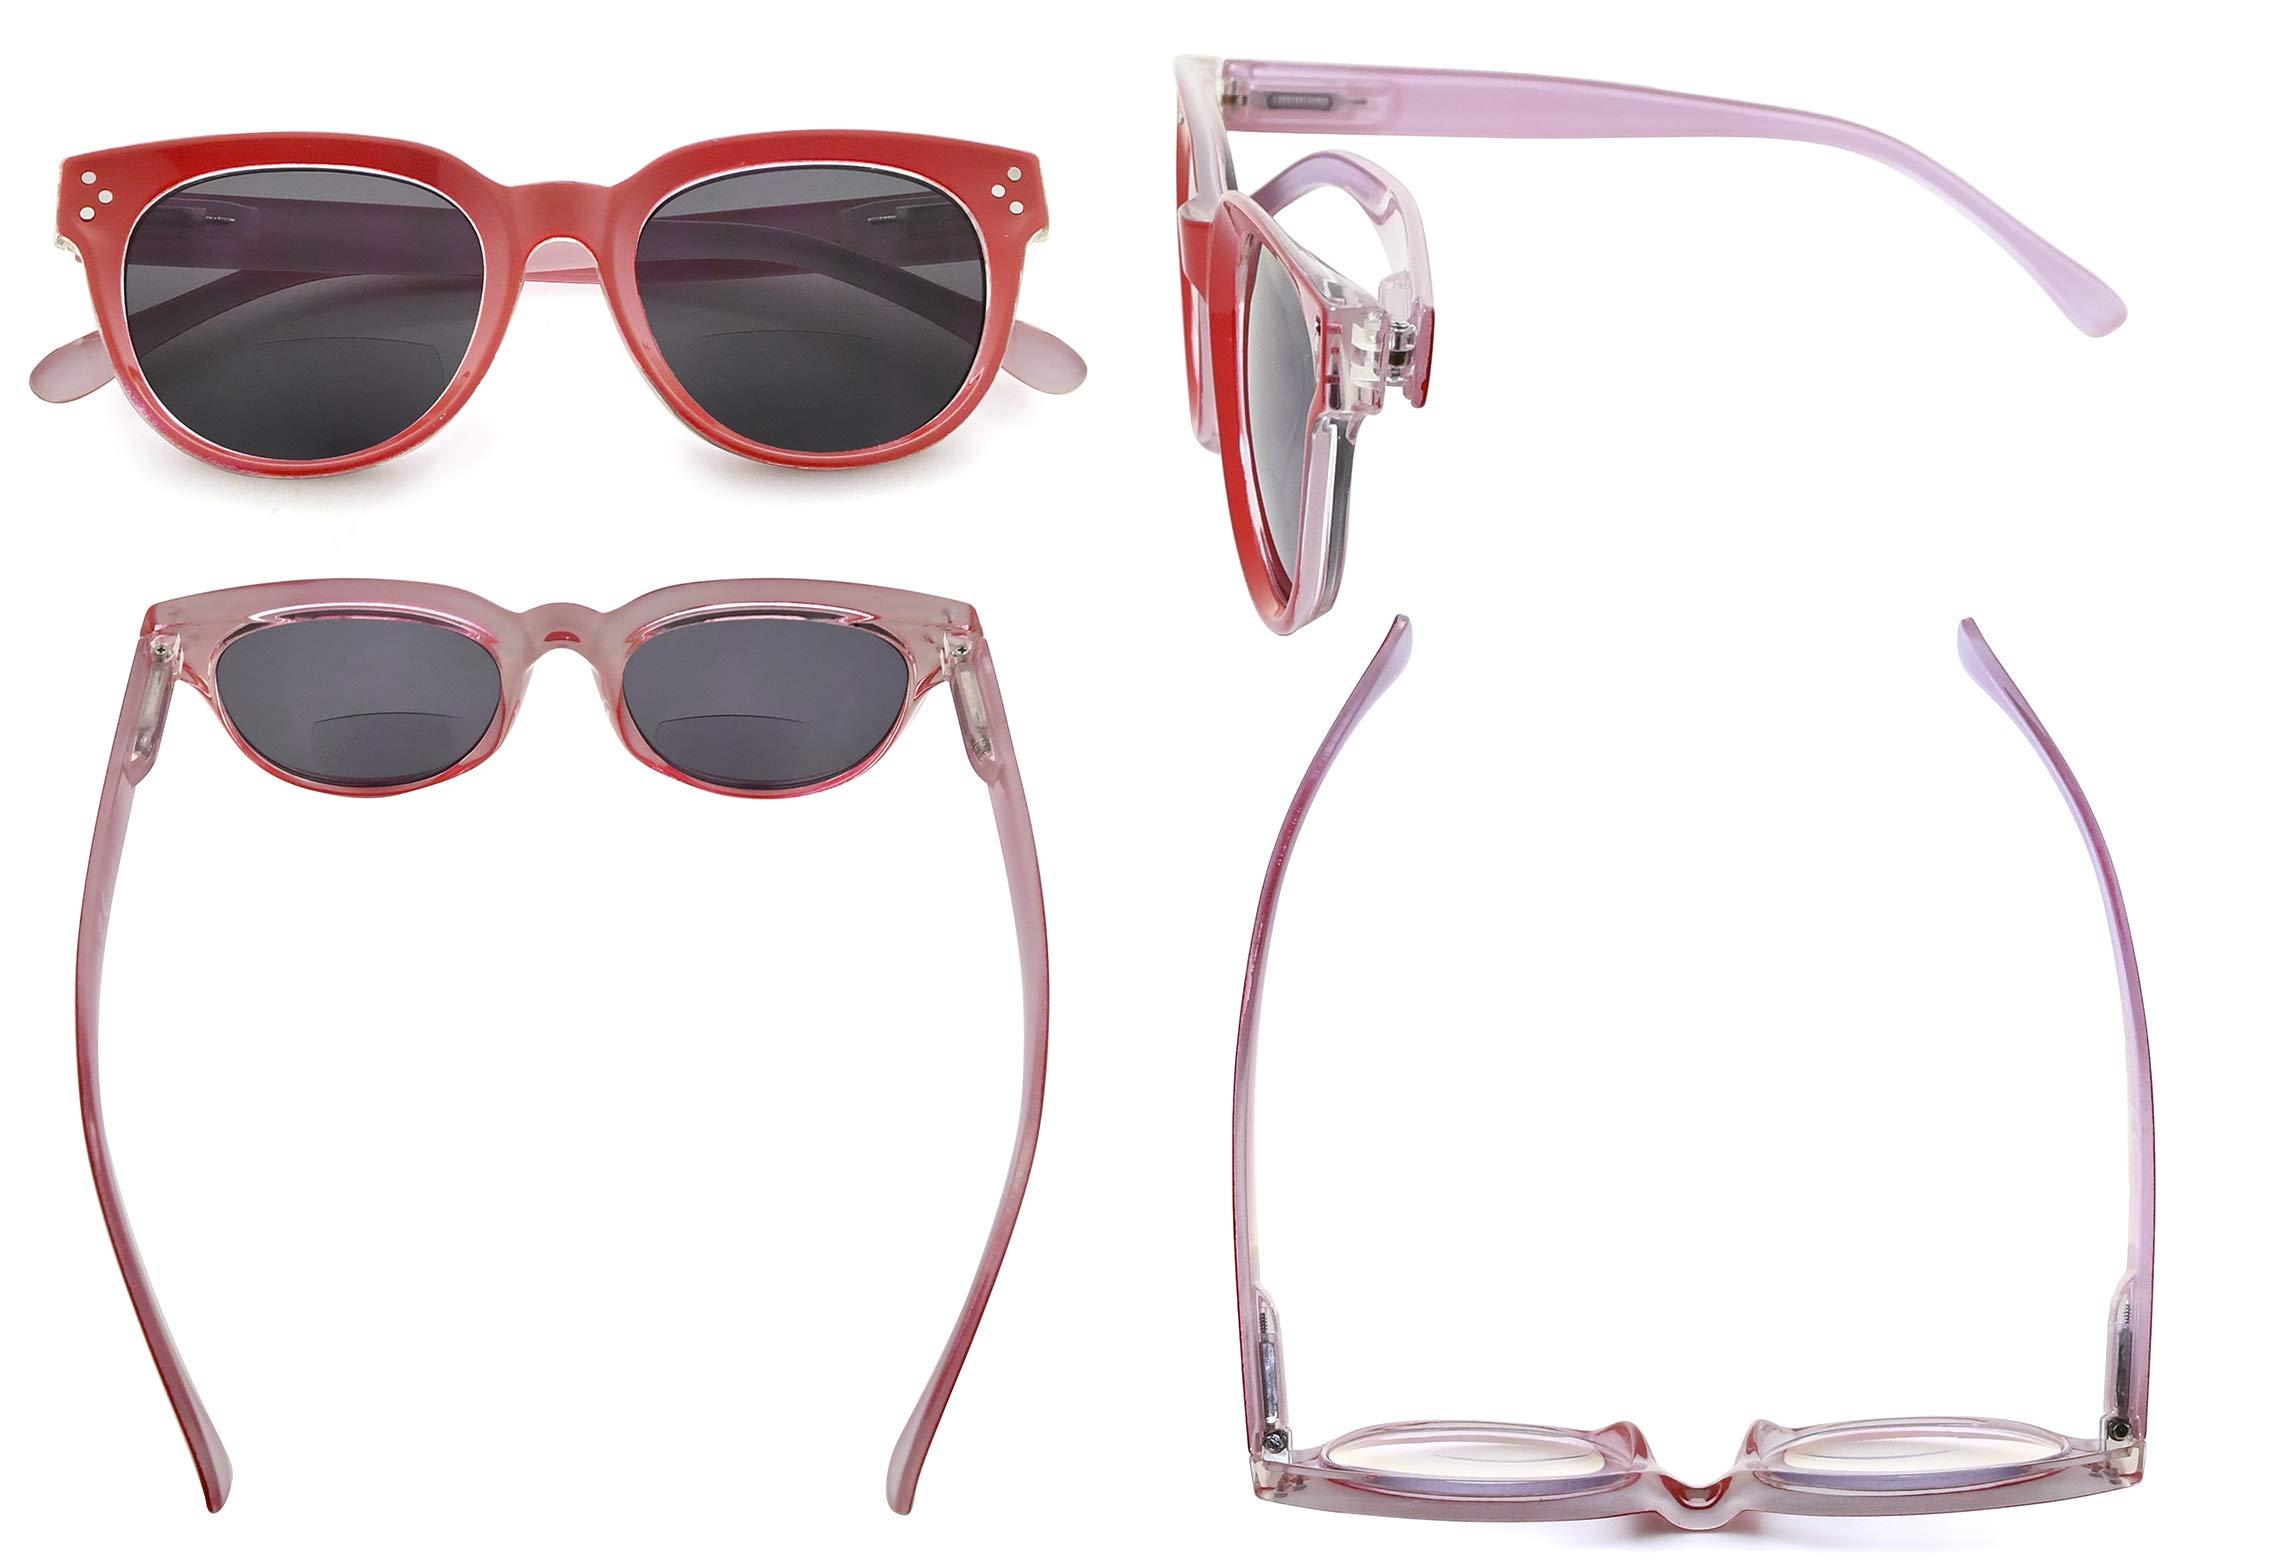 Eyekepper Bifocal Glasses for Women Reading under the Sun Stylish Bifocal Readers Tinted Lens - Red +3.00 6